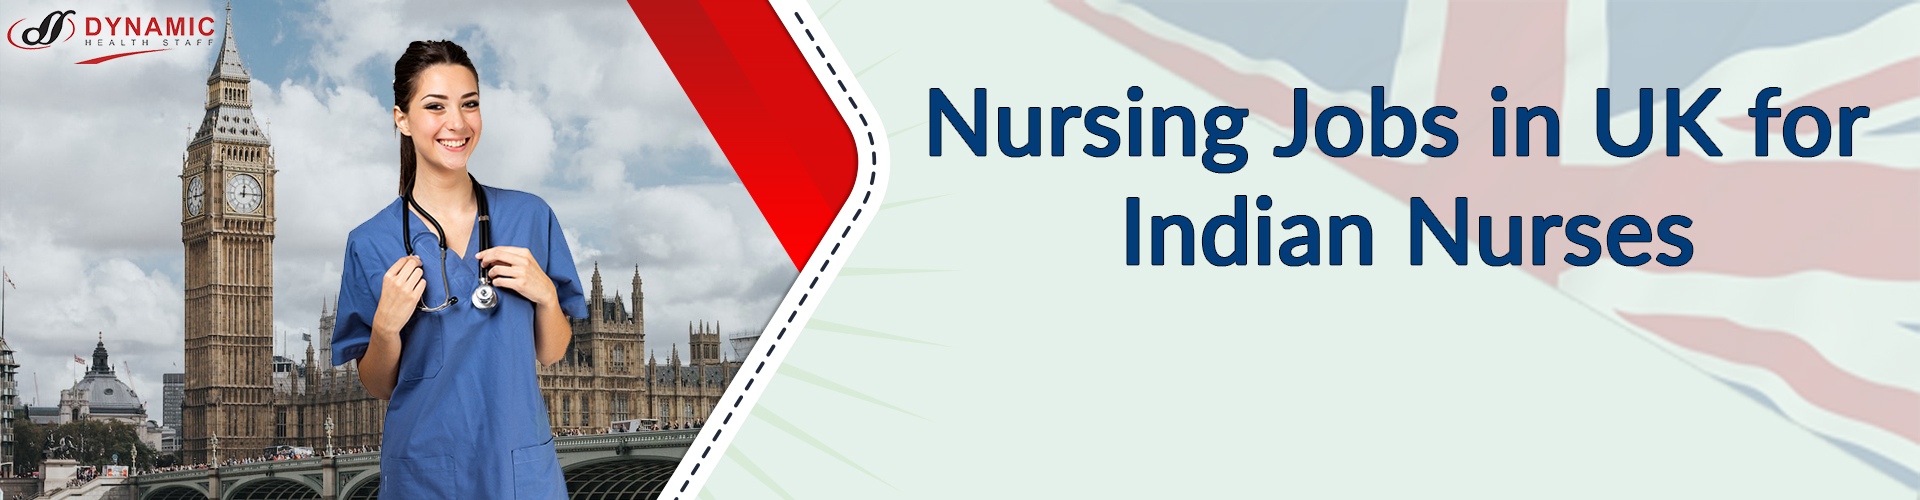 Nursing Jobs in UK for Indian Nurses